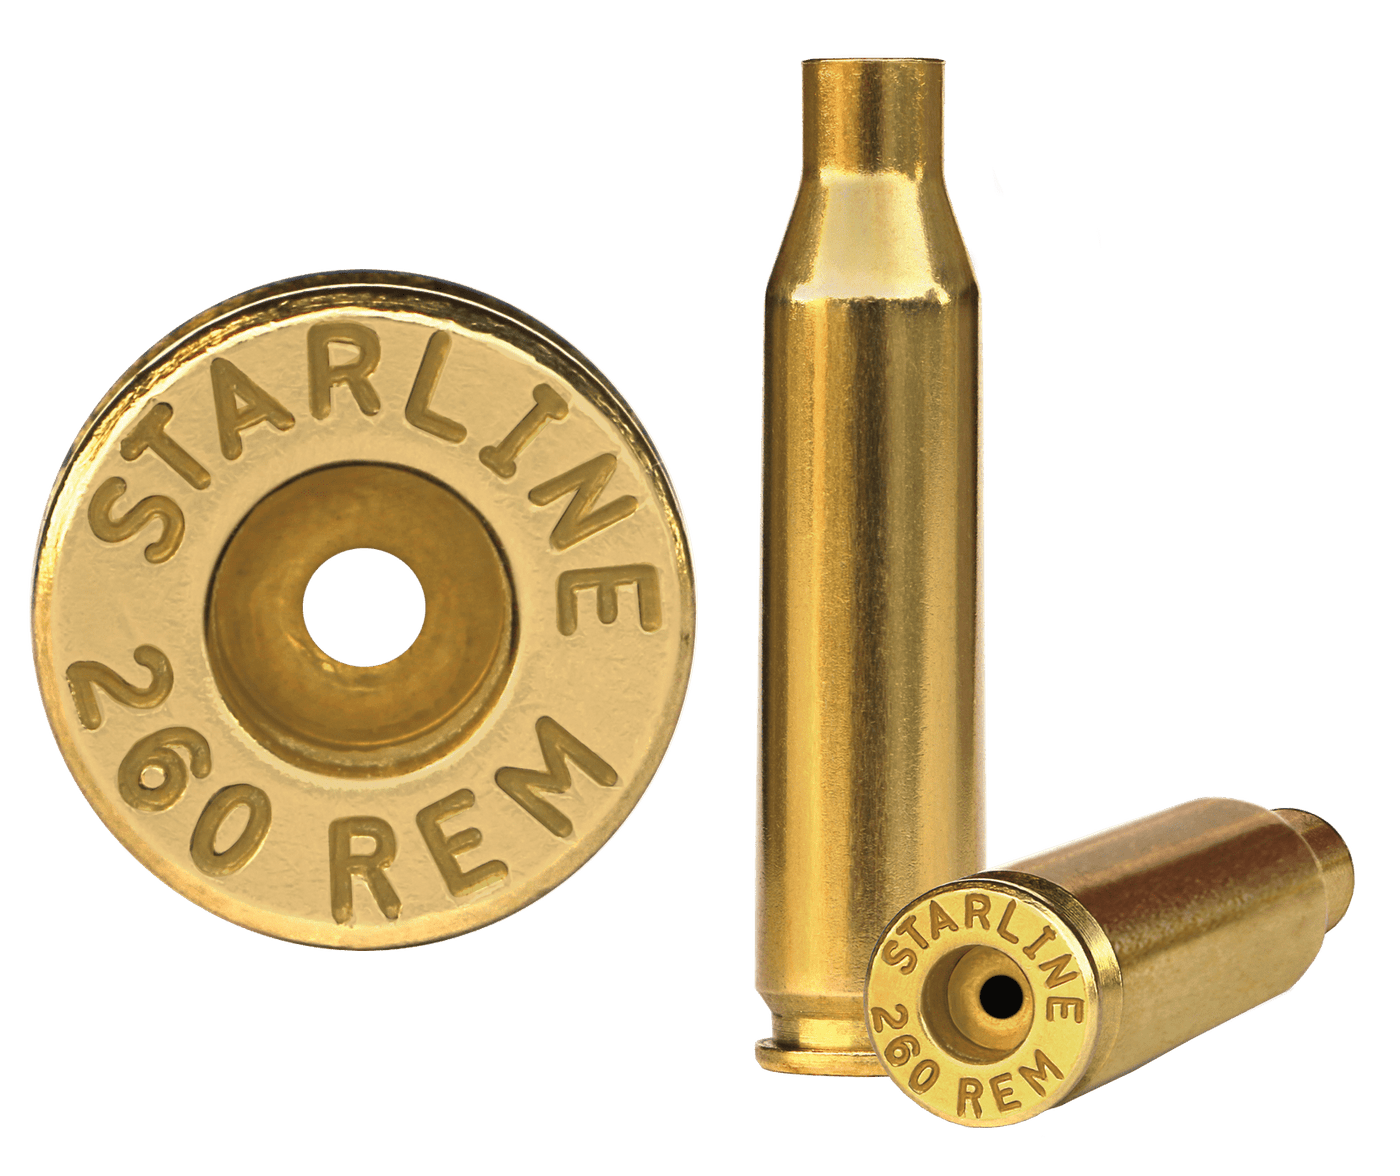 Starline Brass Starline Brass Unprimed Cases, Star 260remeup-50        Unp Brass 260 Remington Reloading